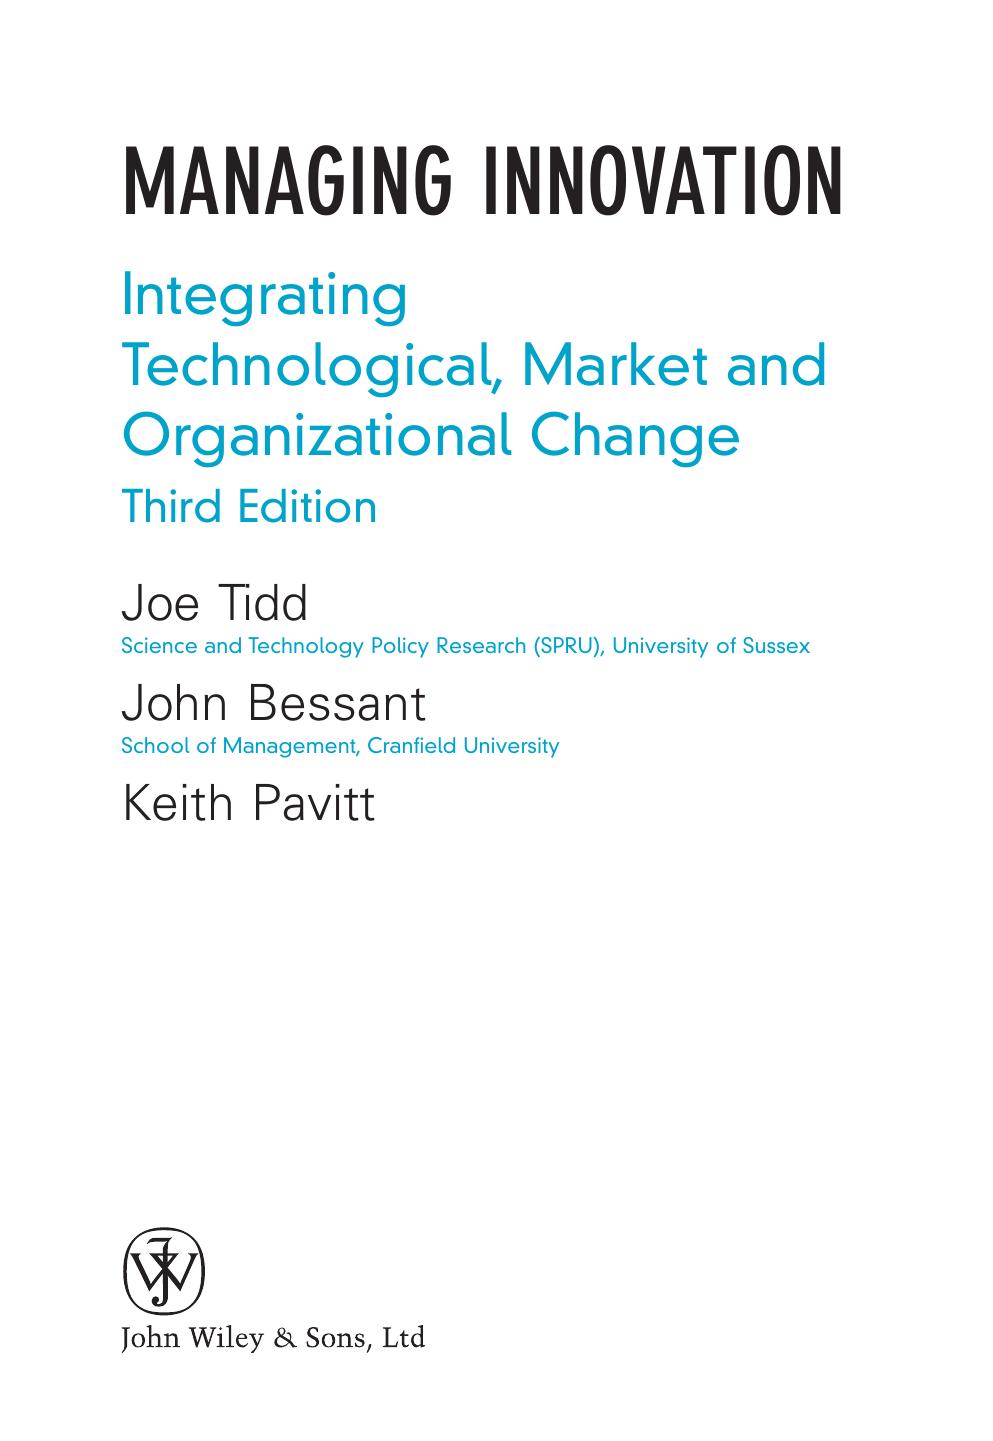 Joe Tidd, John Bessant, Keith Pavitt Managing Innovation Integrating Technological, Market and Organizational Change, 3rd Edition 2005